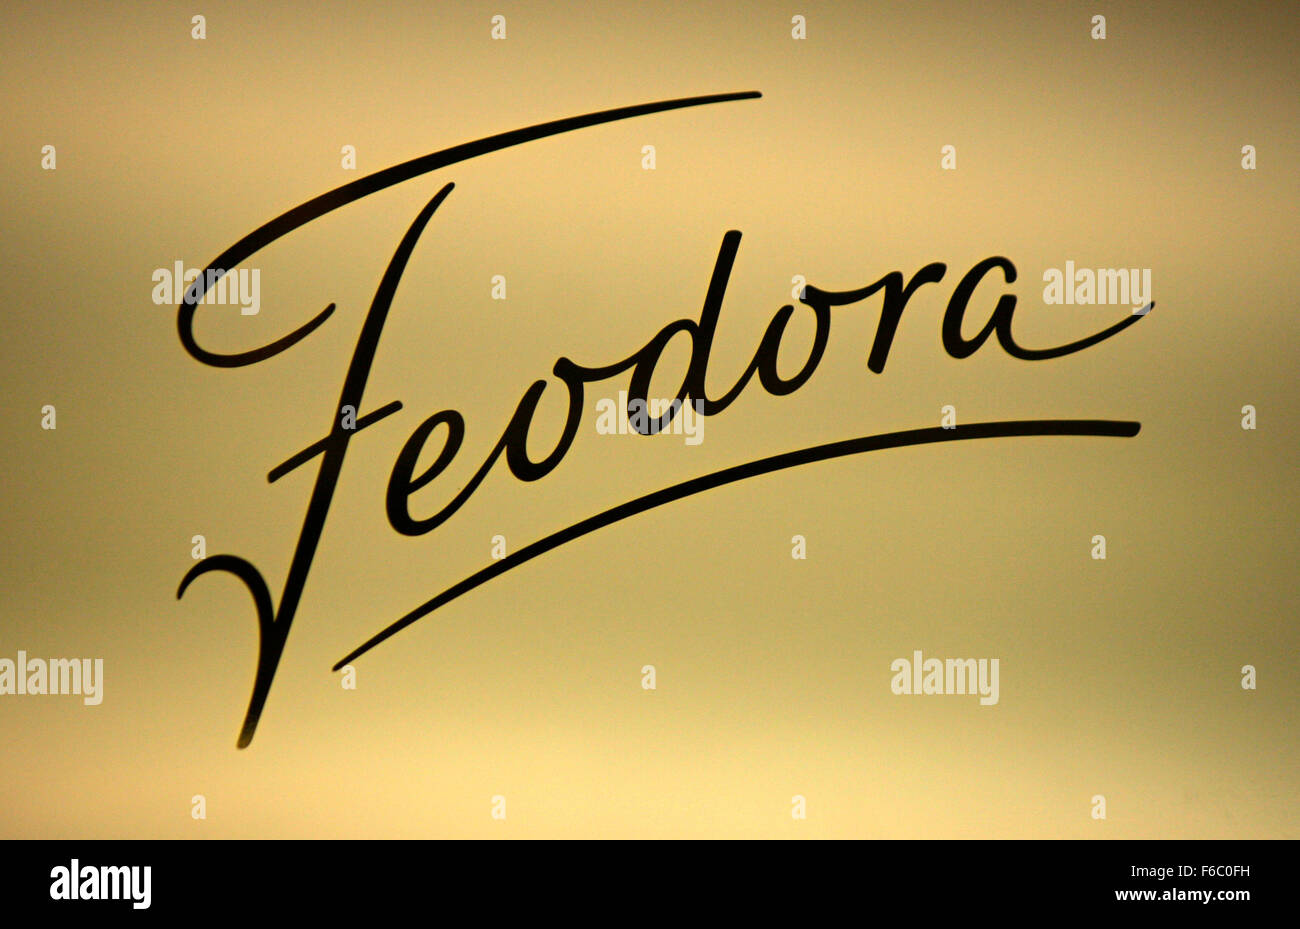 Markenname: "Feodora", Berlin. Stockfoto